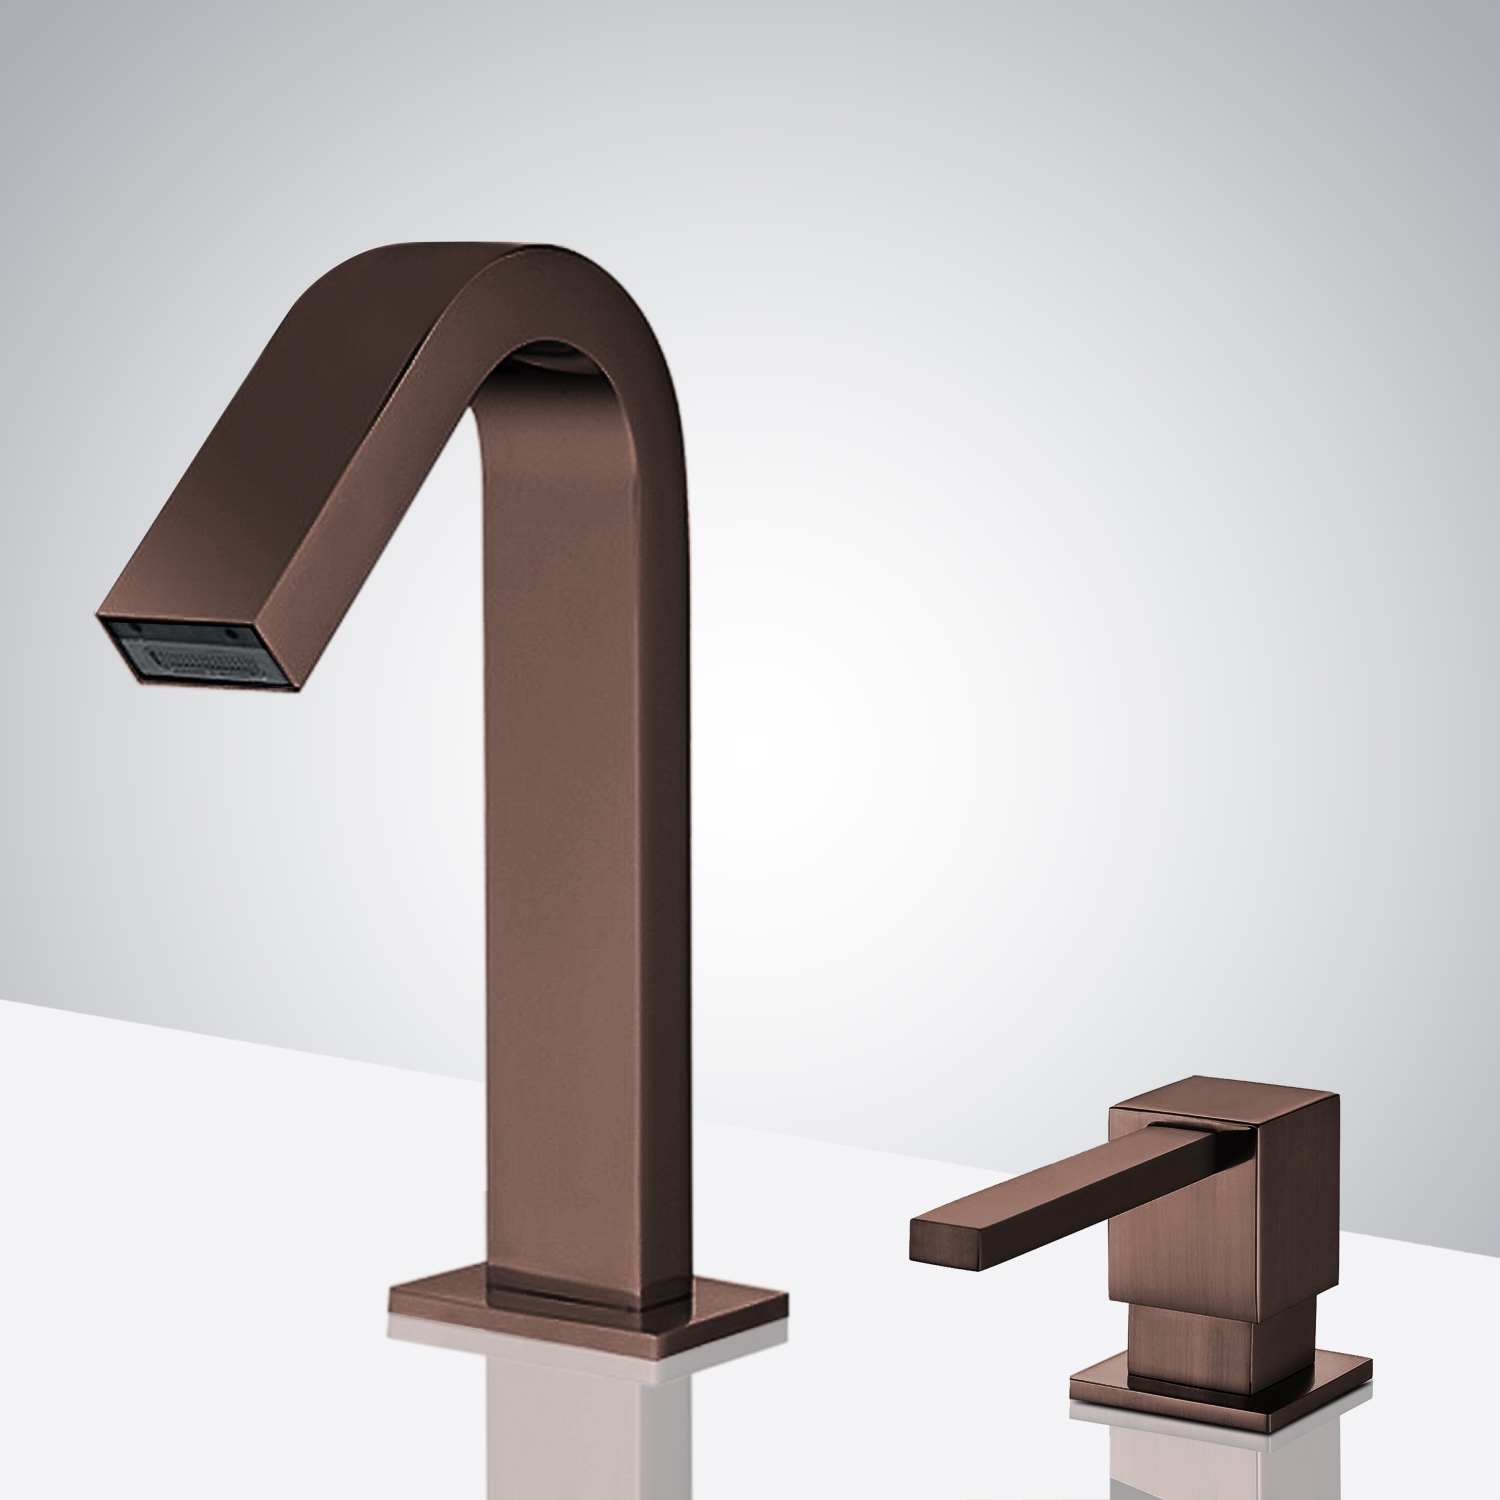 Fontana  Light Oil Rubbed Bronze Touch less Automatic Sensor Faucet & Manual Soap Dispenser